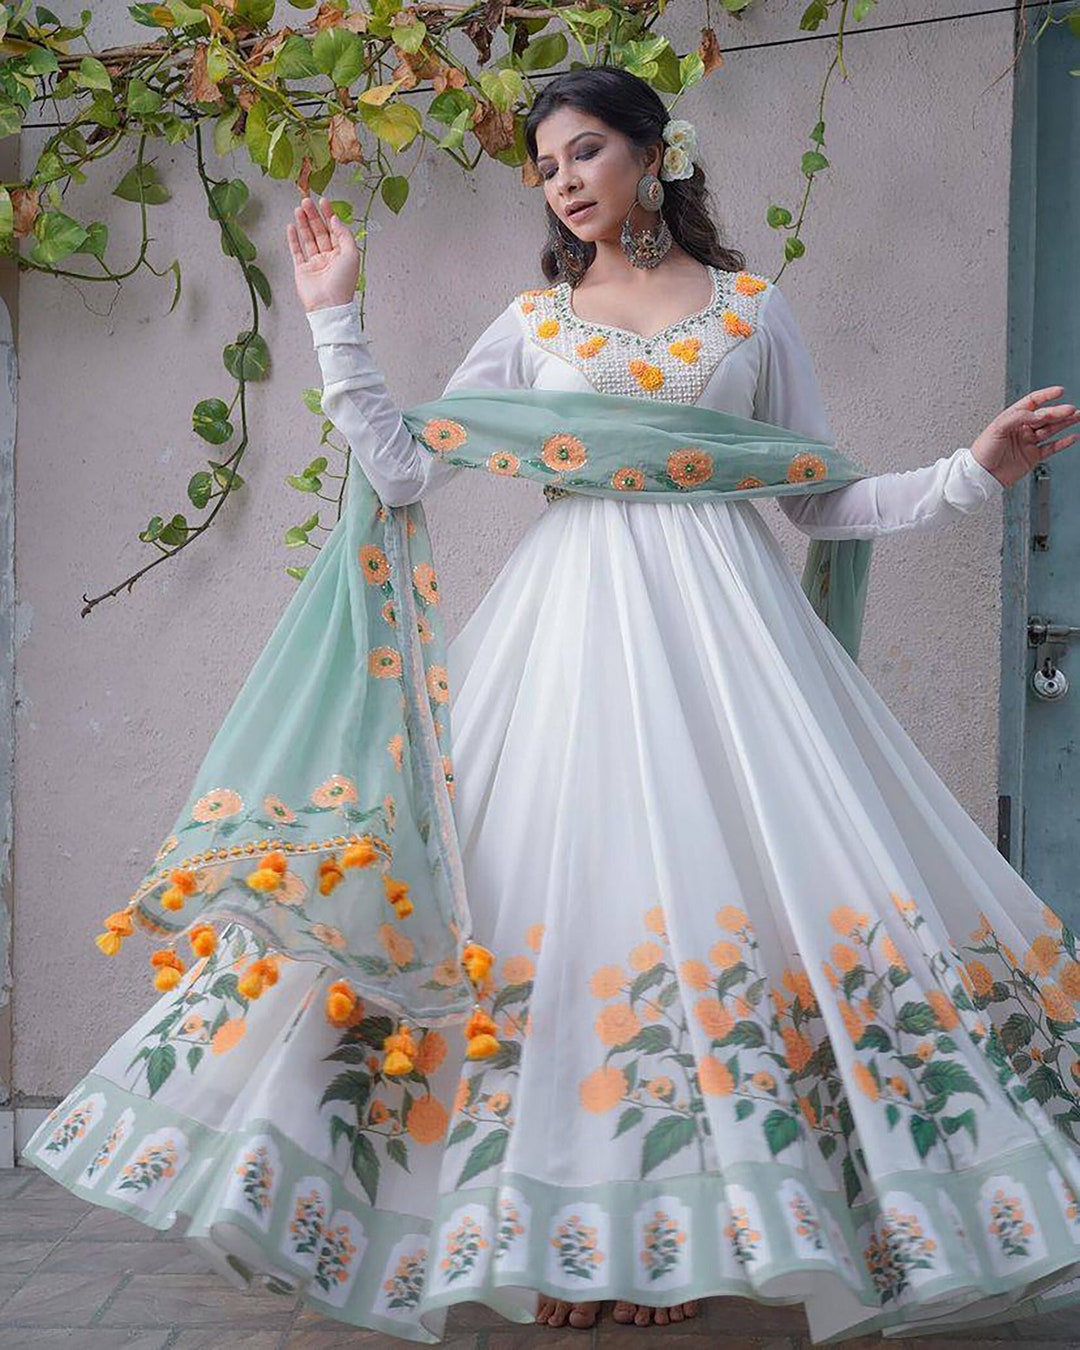 KAMEEZ PARTY GOWN ANARKALI DRESS BOLLYWOOD PAKISTANI INDIAN WEDDING SUIT  SHALWAR | eBay